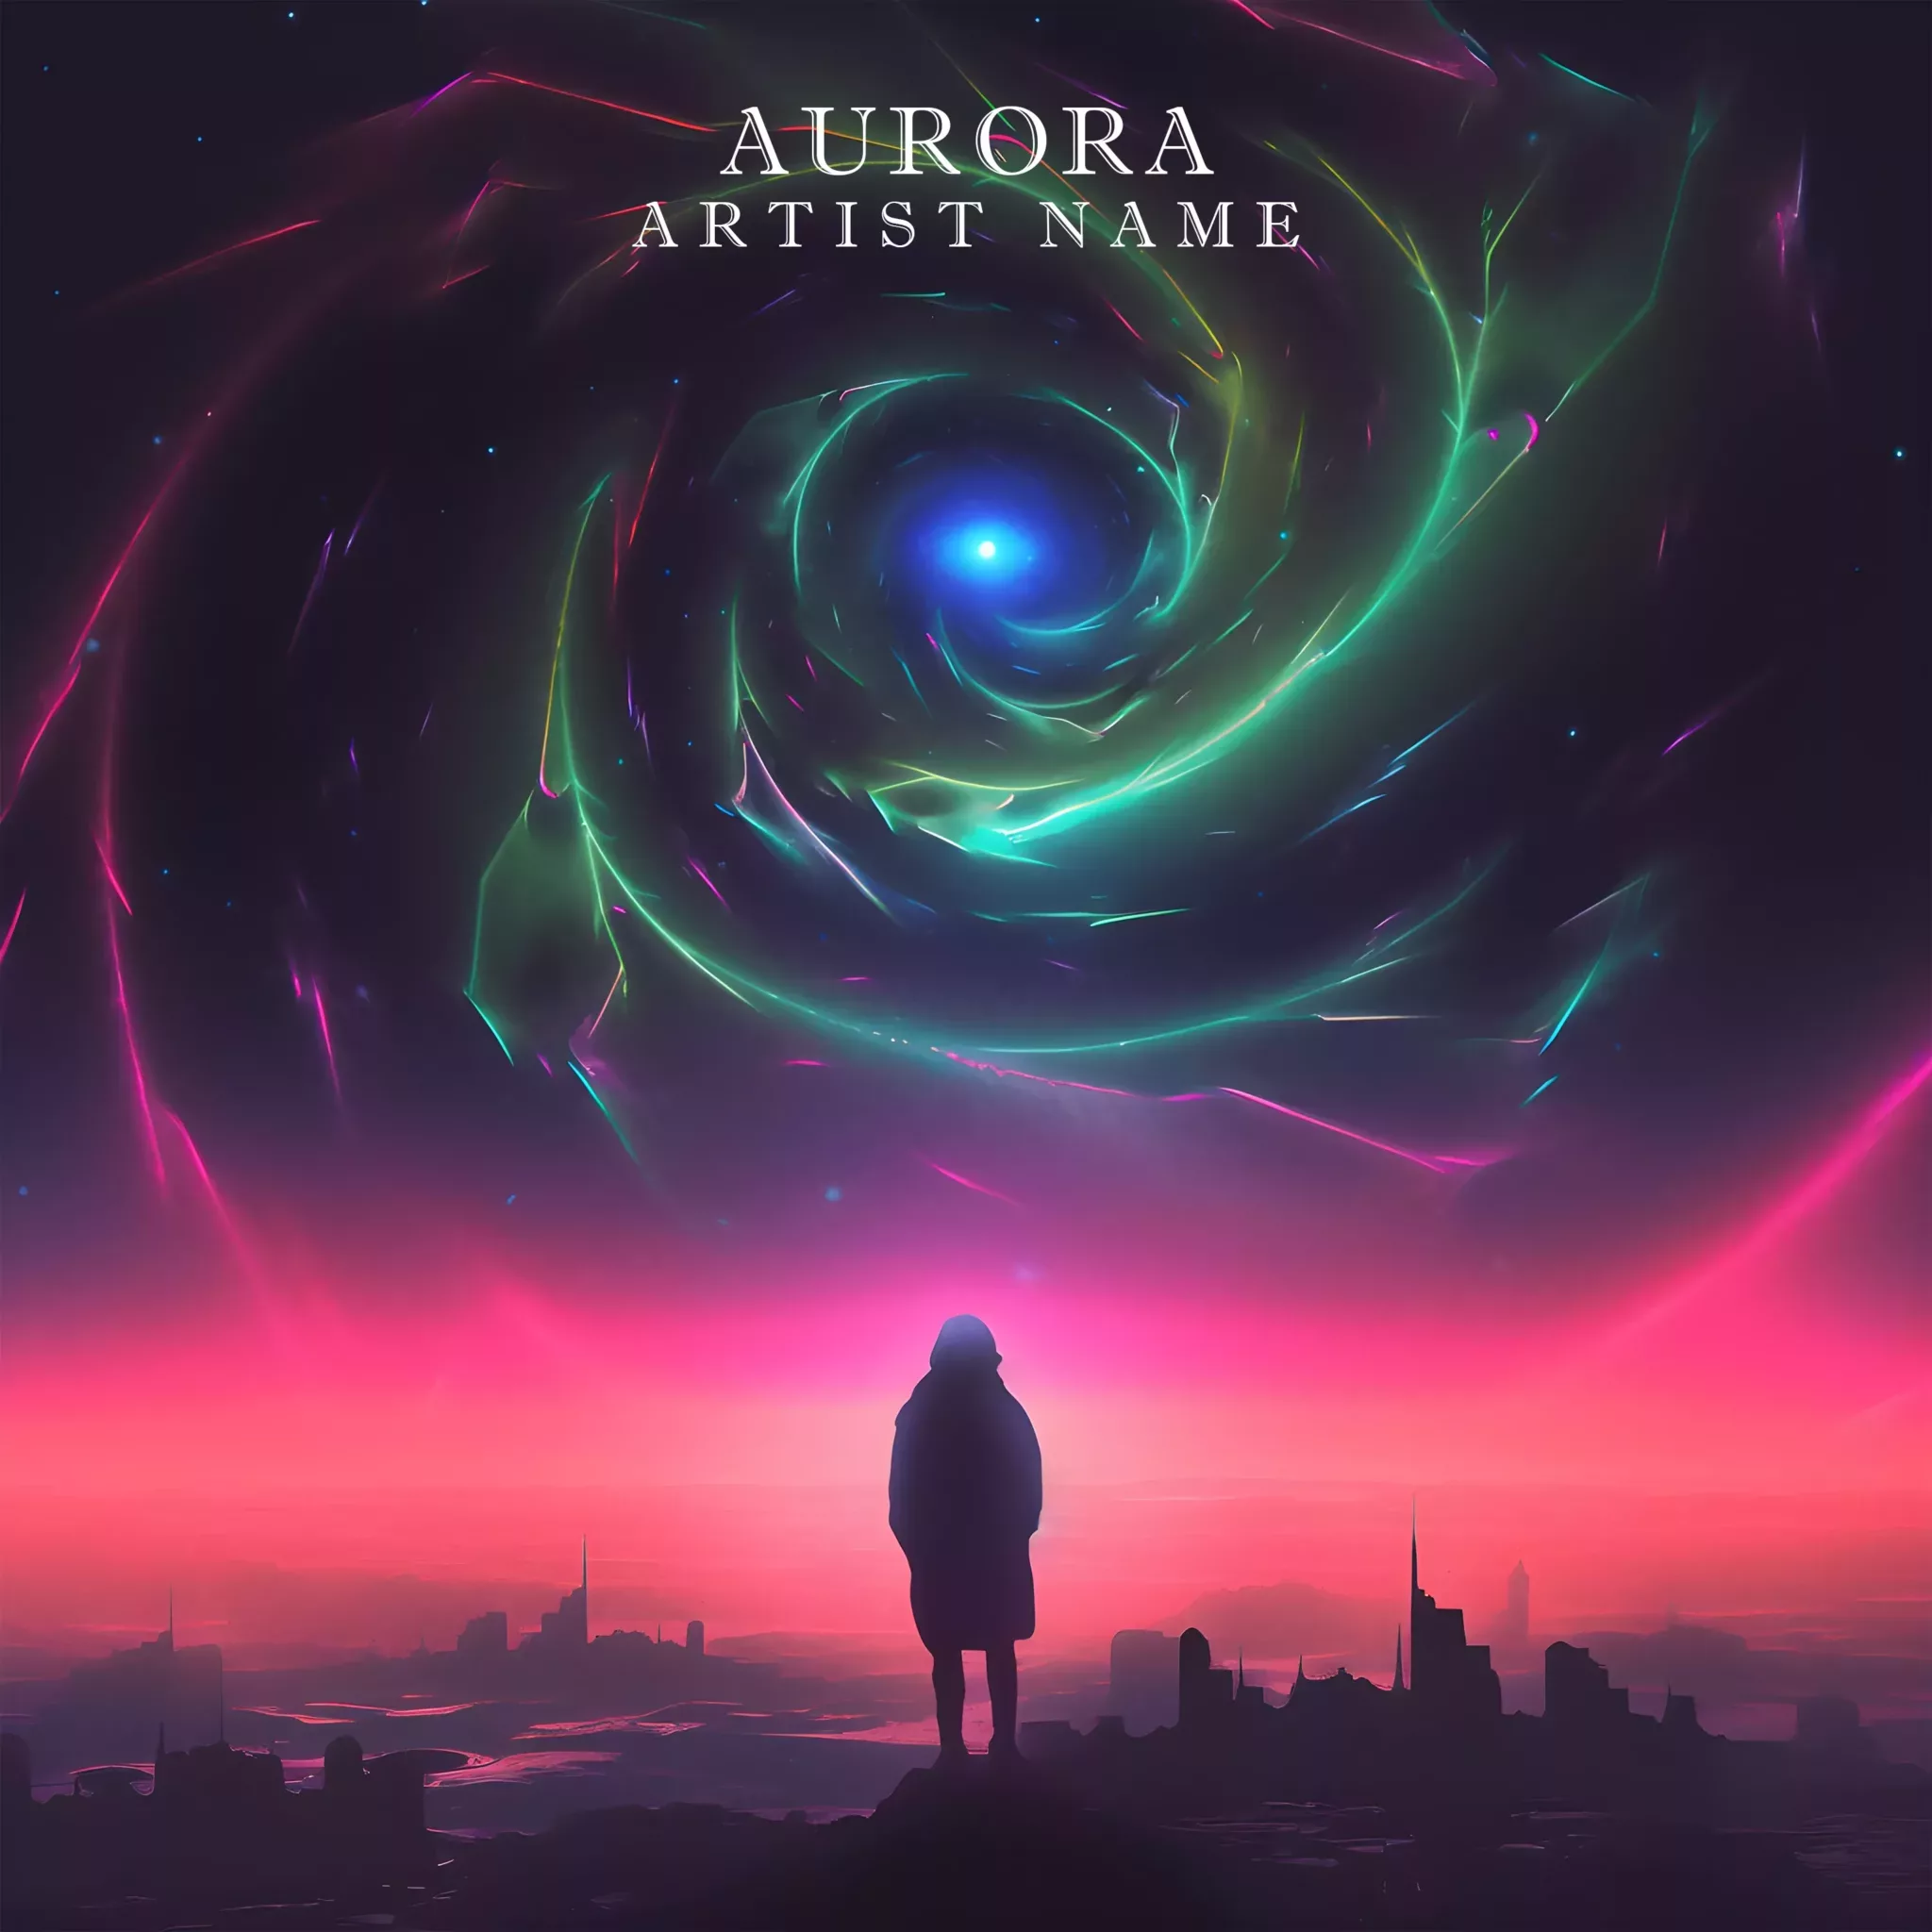 Aurora cover art for sale